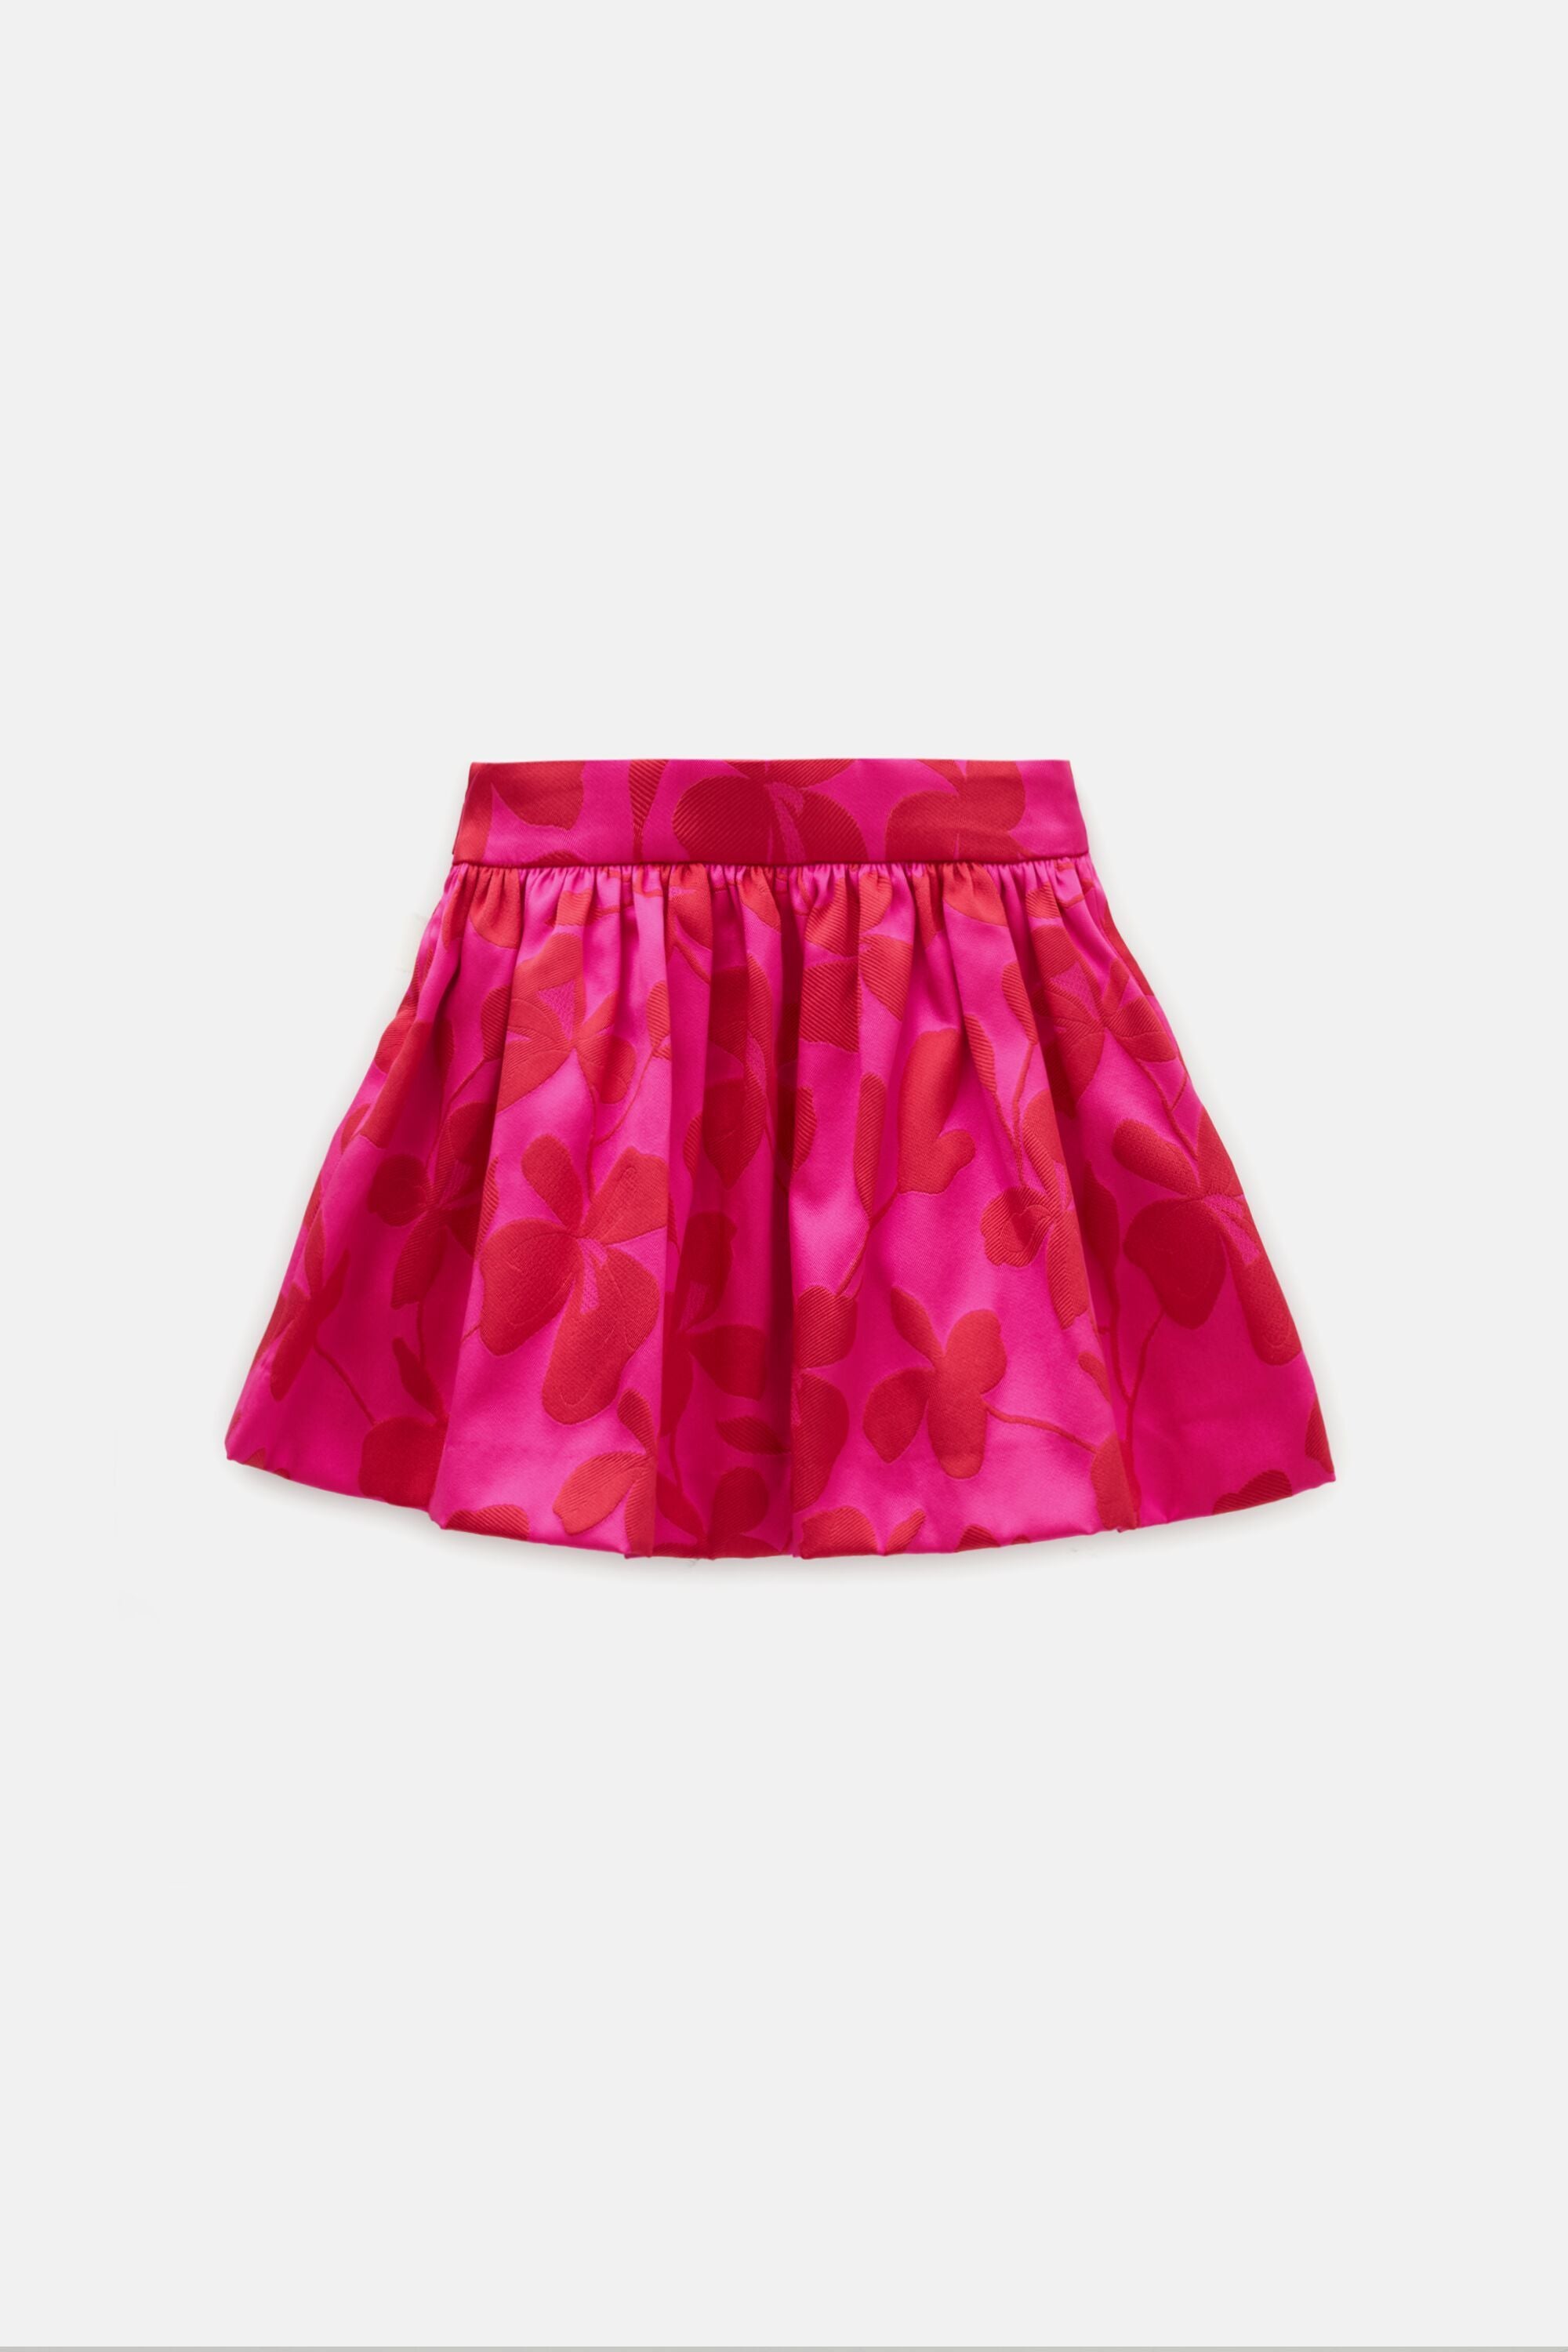 Orangery brocade skirt & top set | Surangi